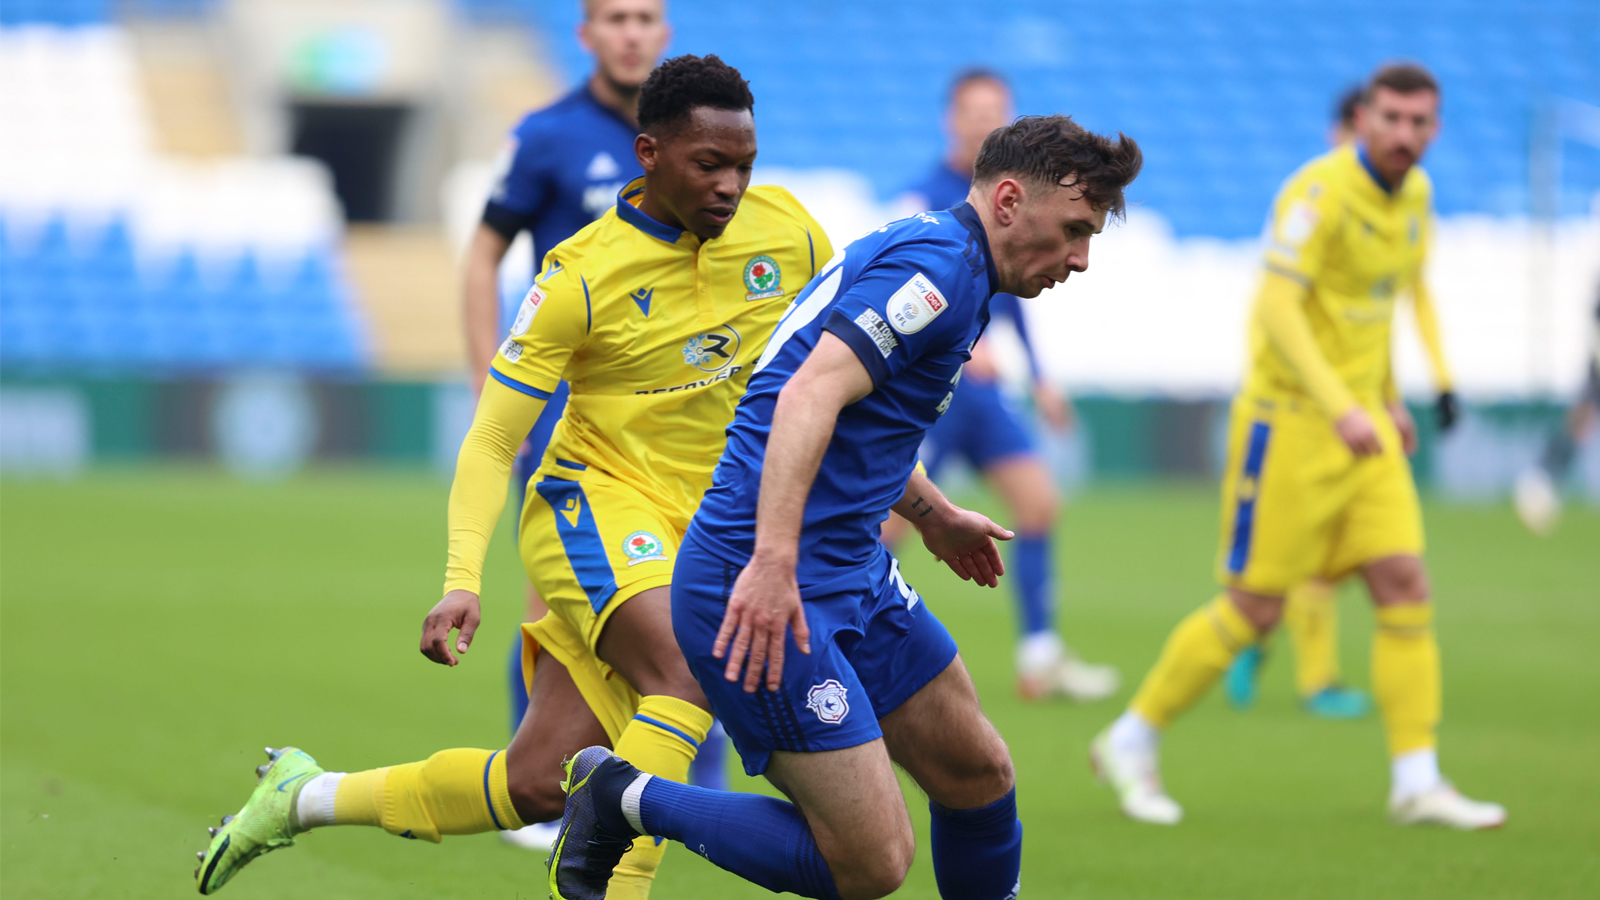 Match Report | Cardiff City 0-1 Blackburn Rovers | Cardiff